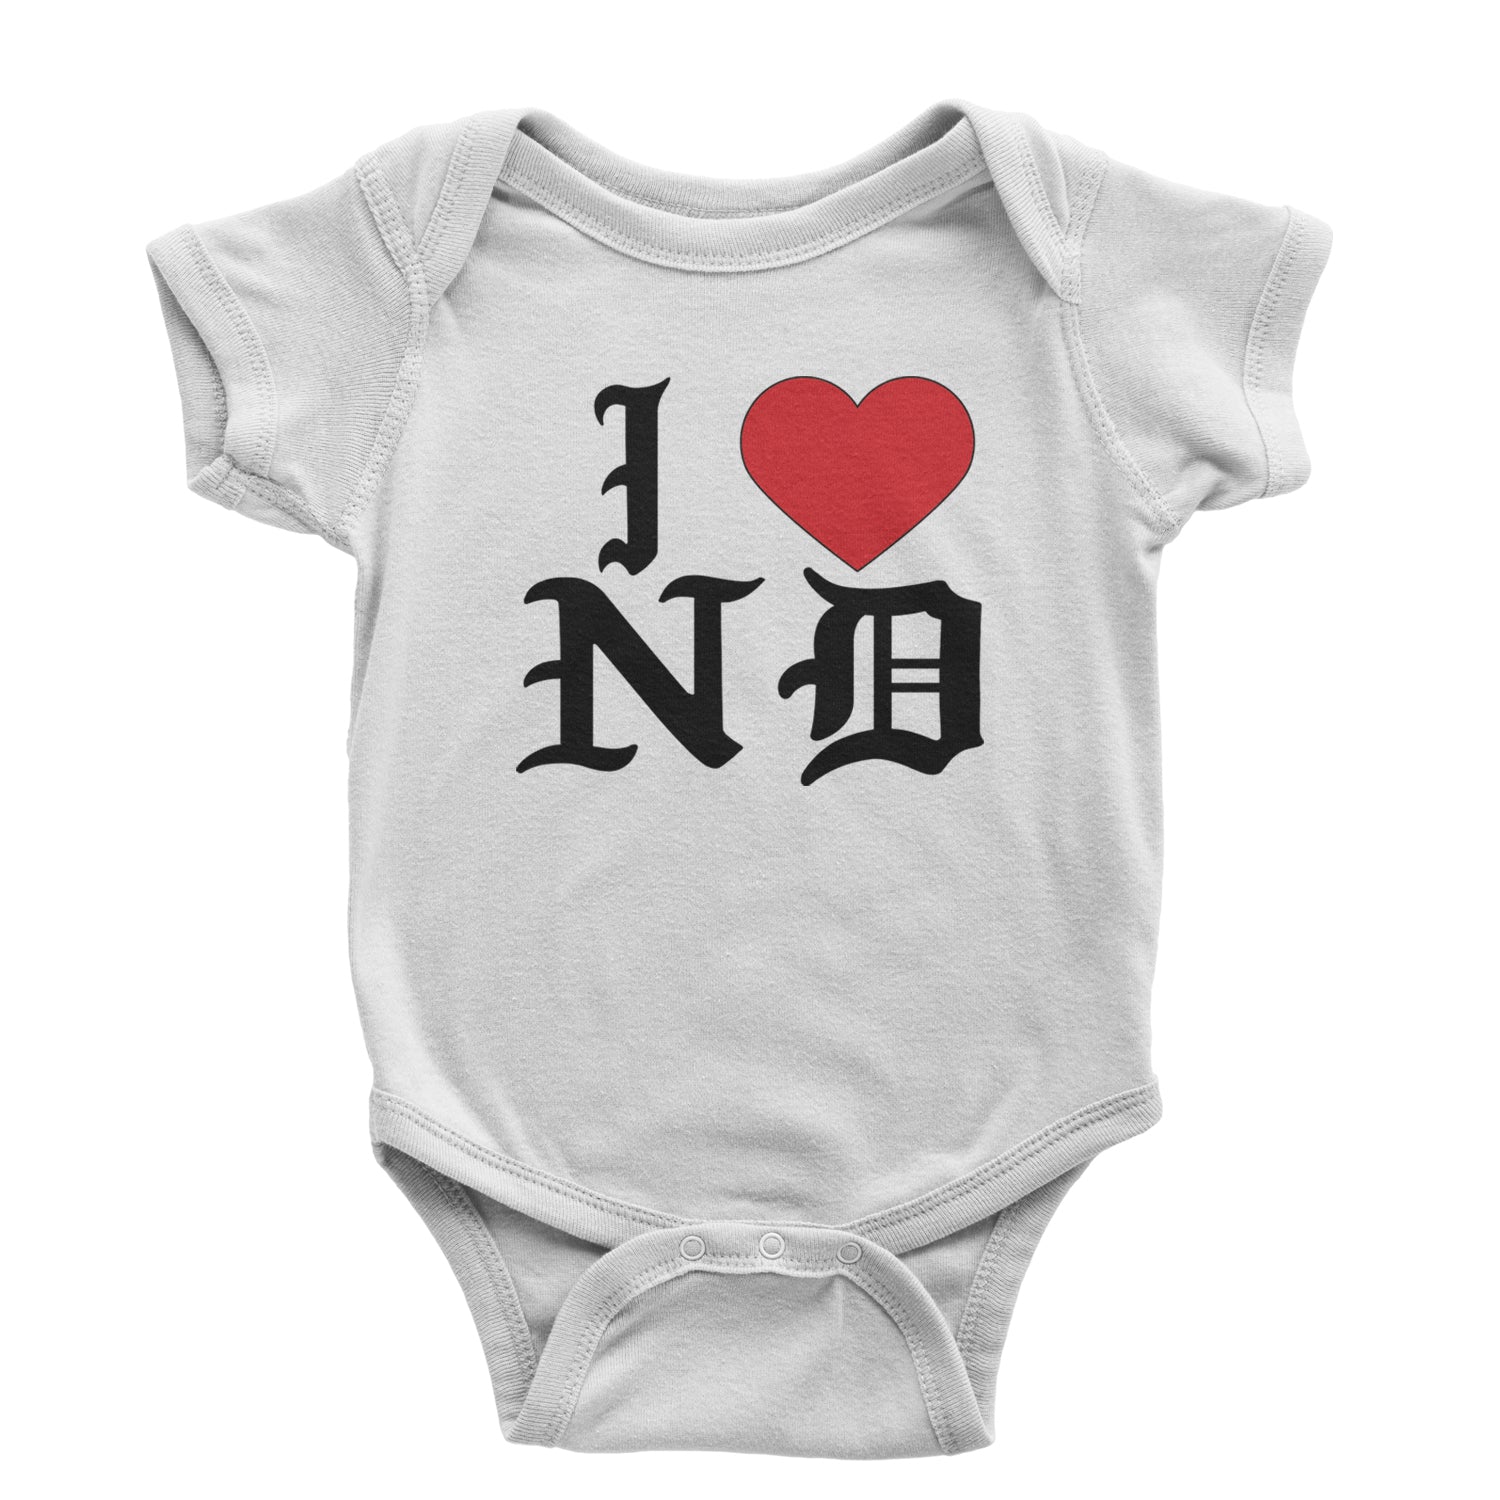 I Heart ND Punk Ska Guts Infant One-Piece Romper Bodysuit and Toddler T-shirt